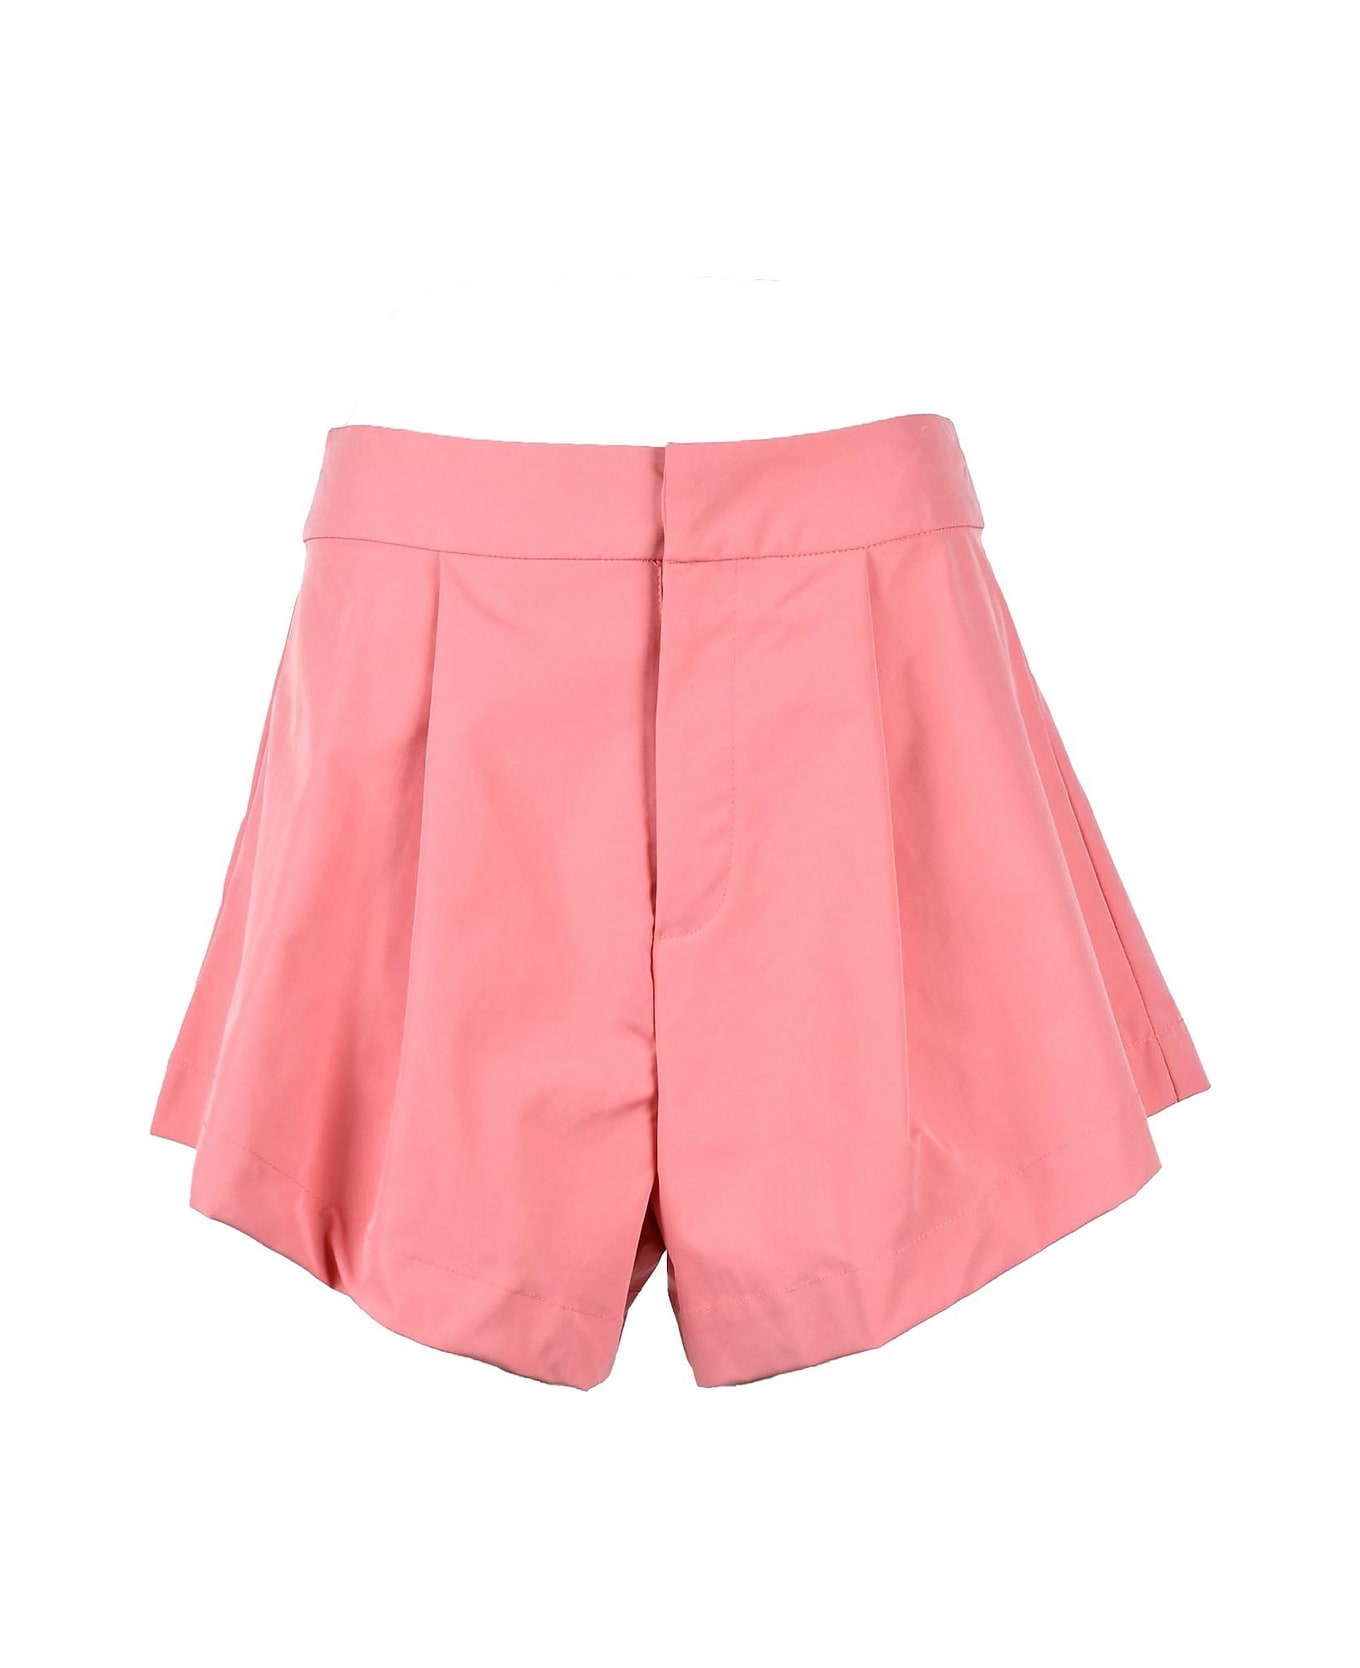 Weili Zheng Women's Pink Shorts - Pink